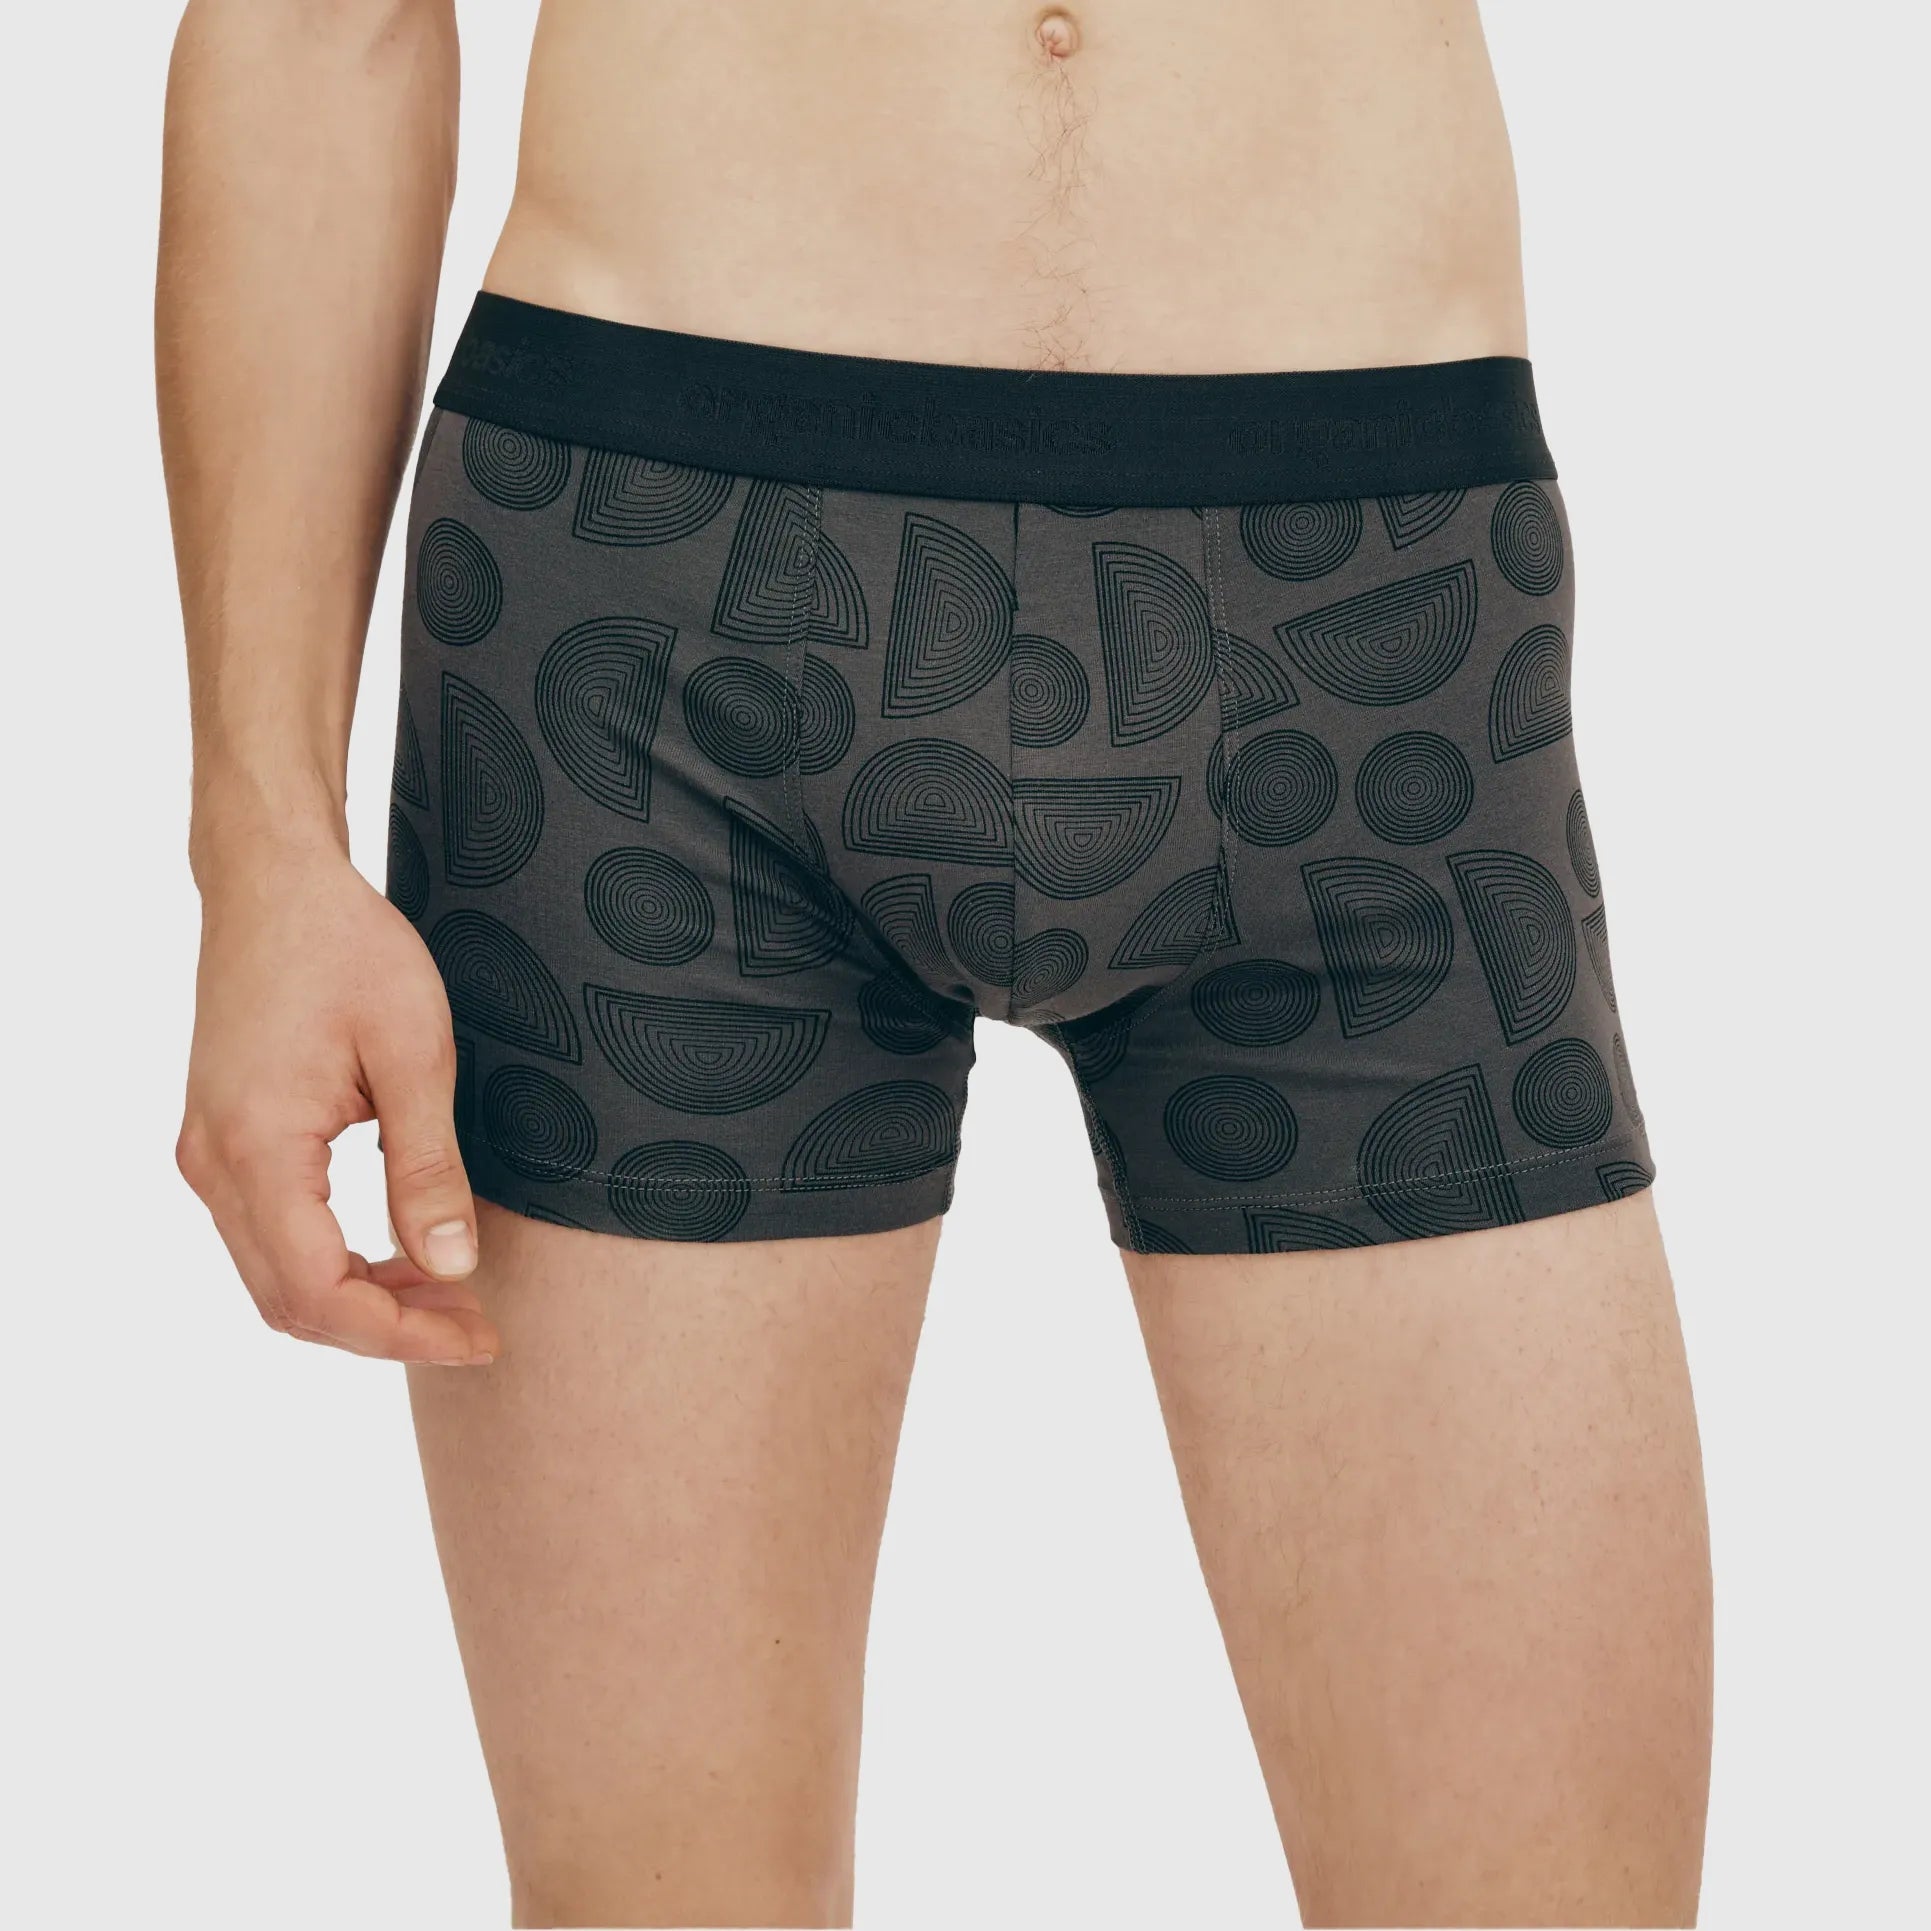 Organic Basics 3-pack Cotton Stretch Boxers - Black / Grey / Orb Underwear Organic Basics 